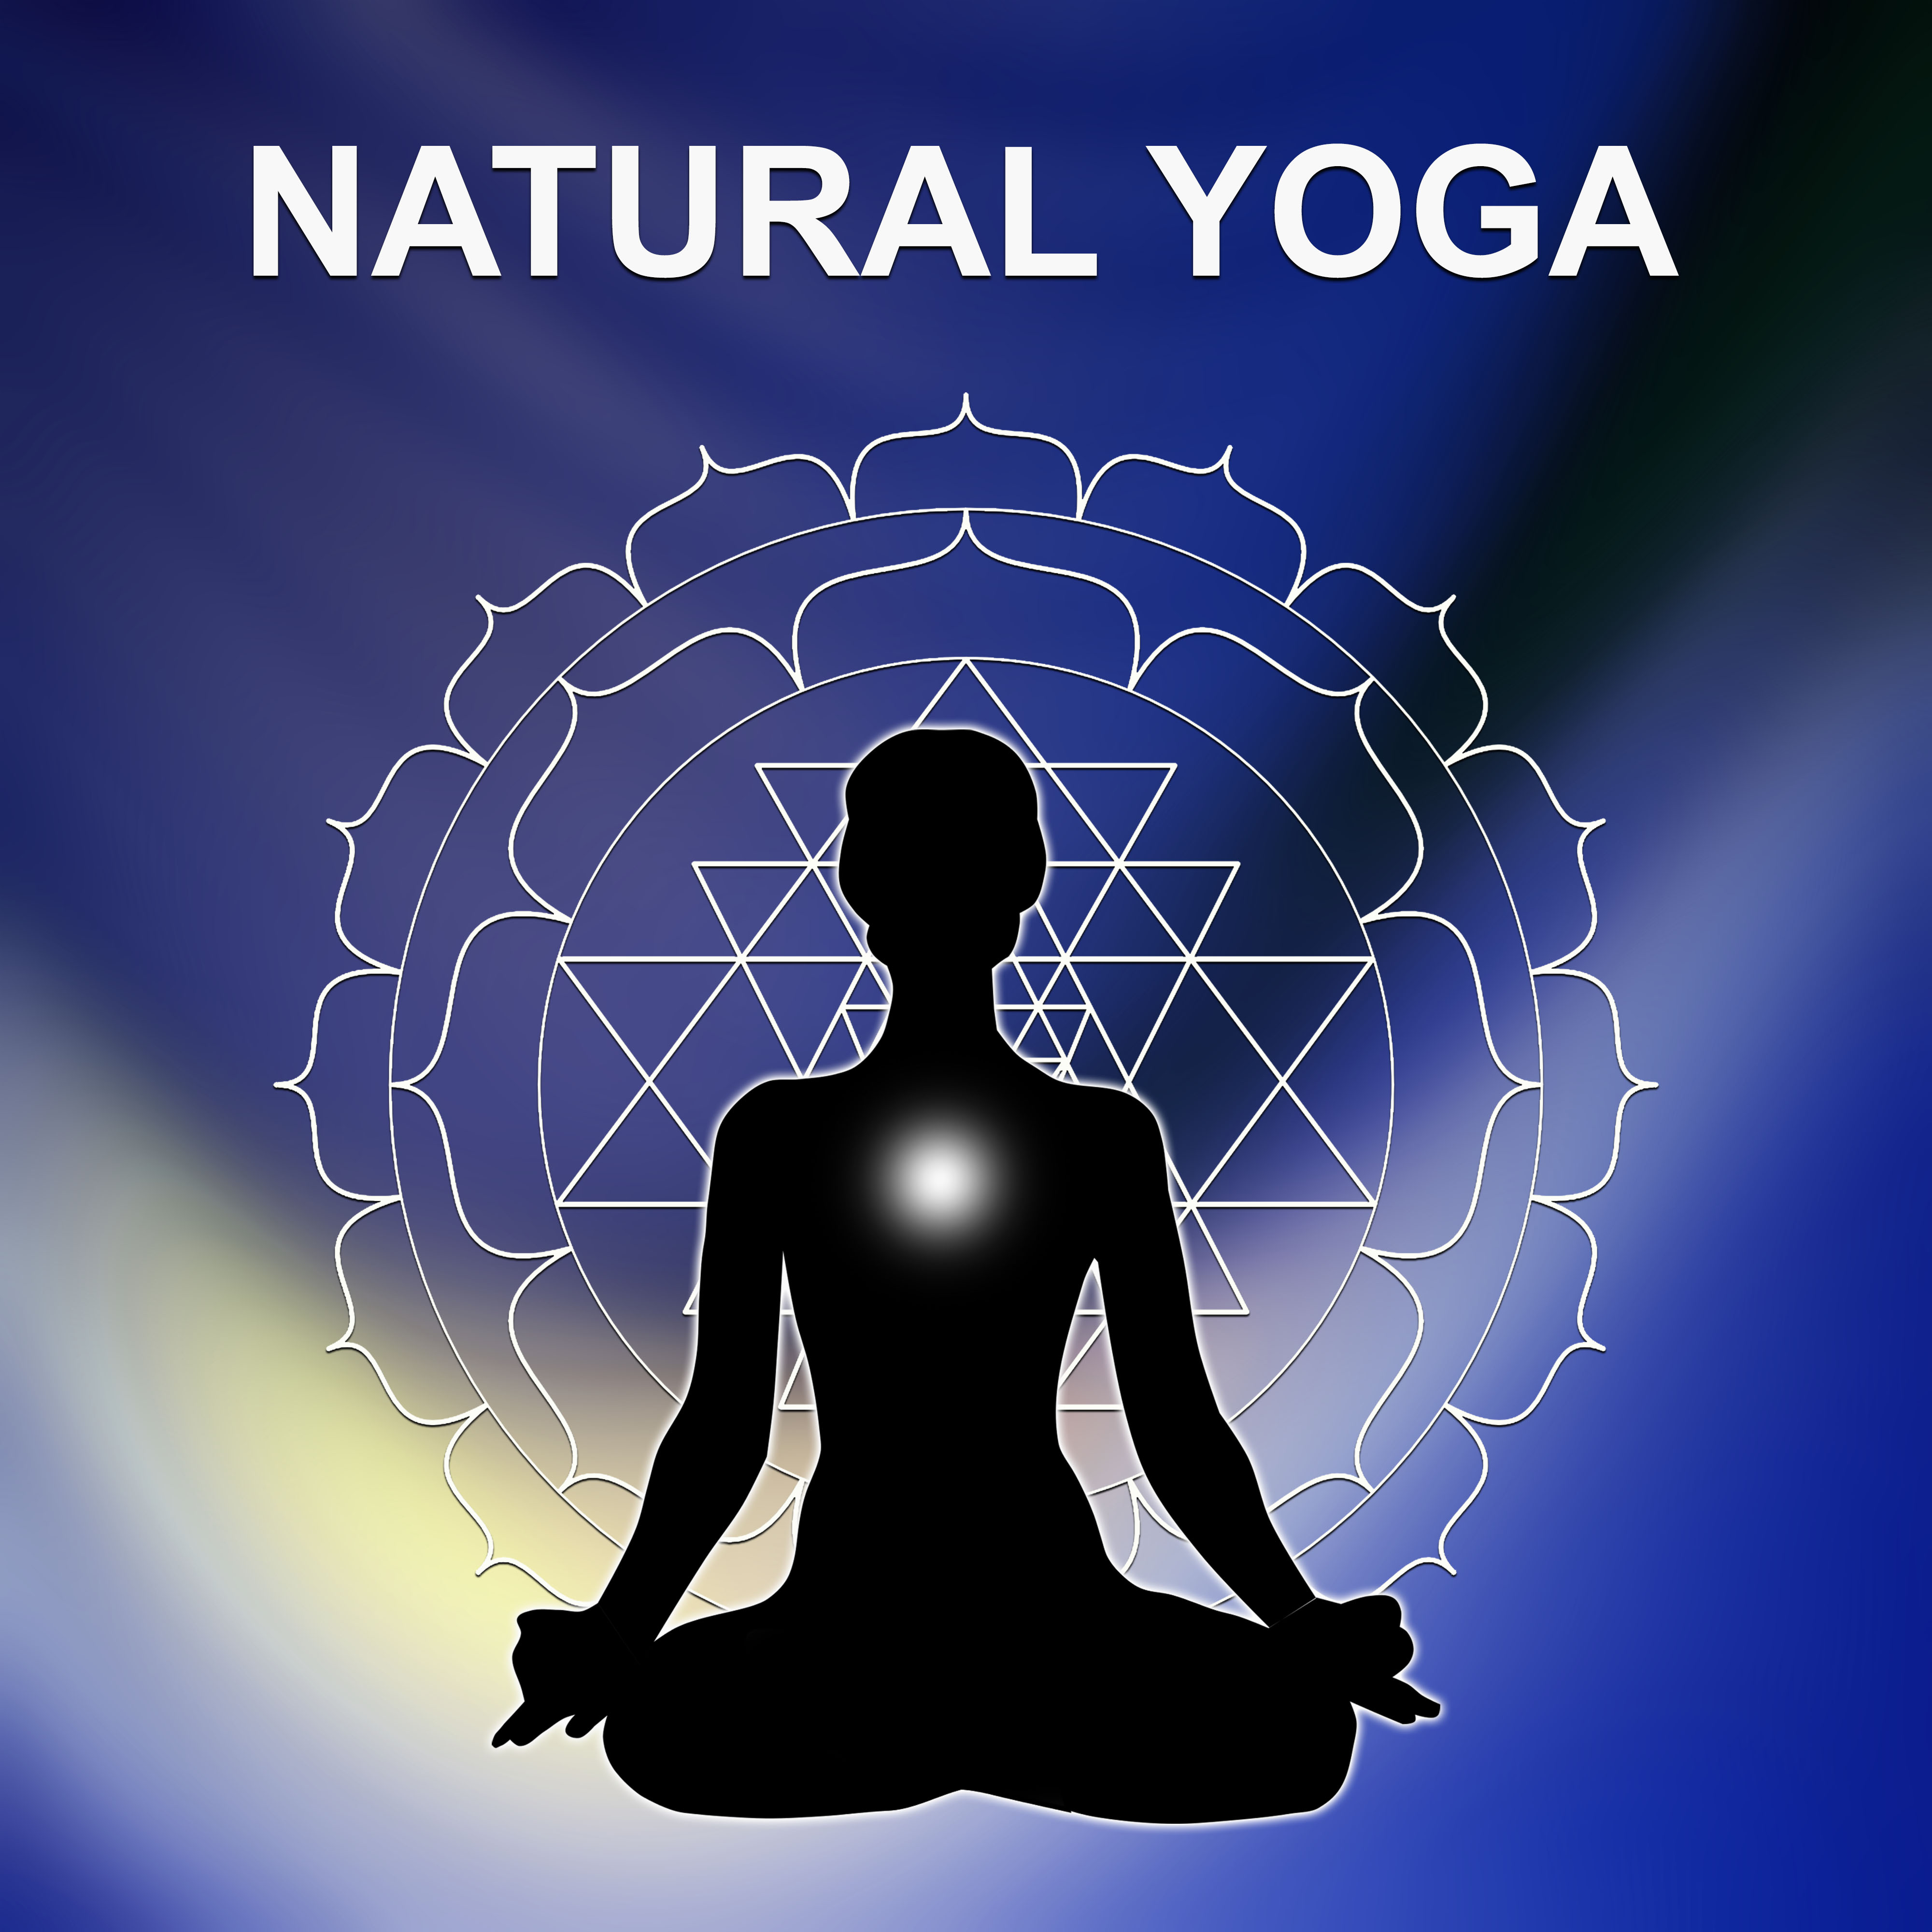 Natural Yoga – Morning Salutation, Meditation Music, Sounds of Nature, Relax